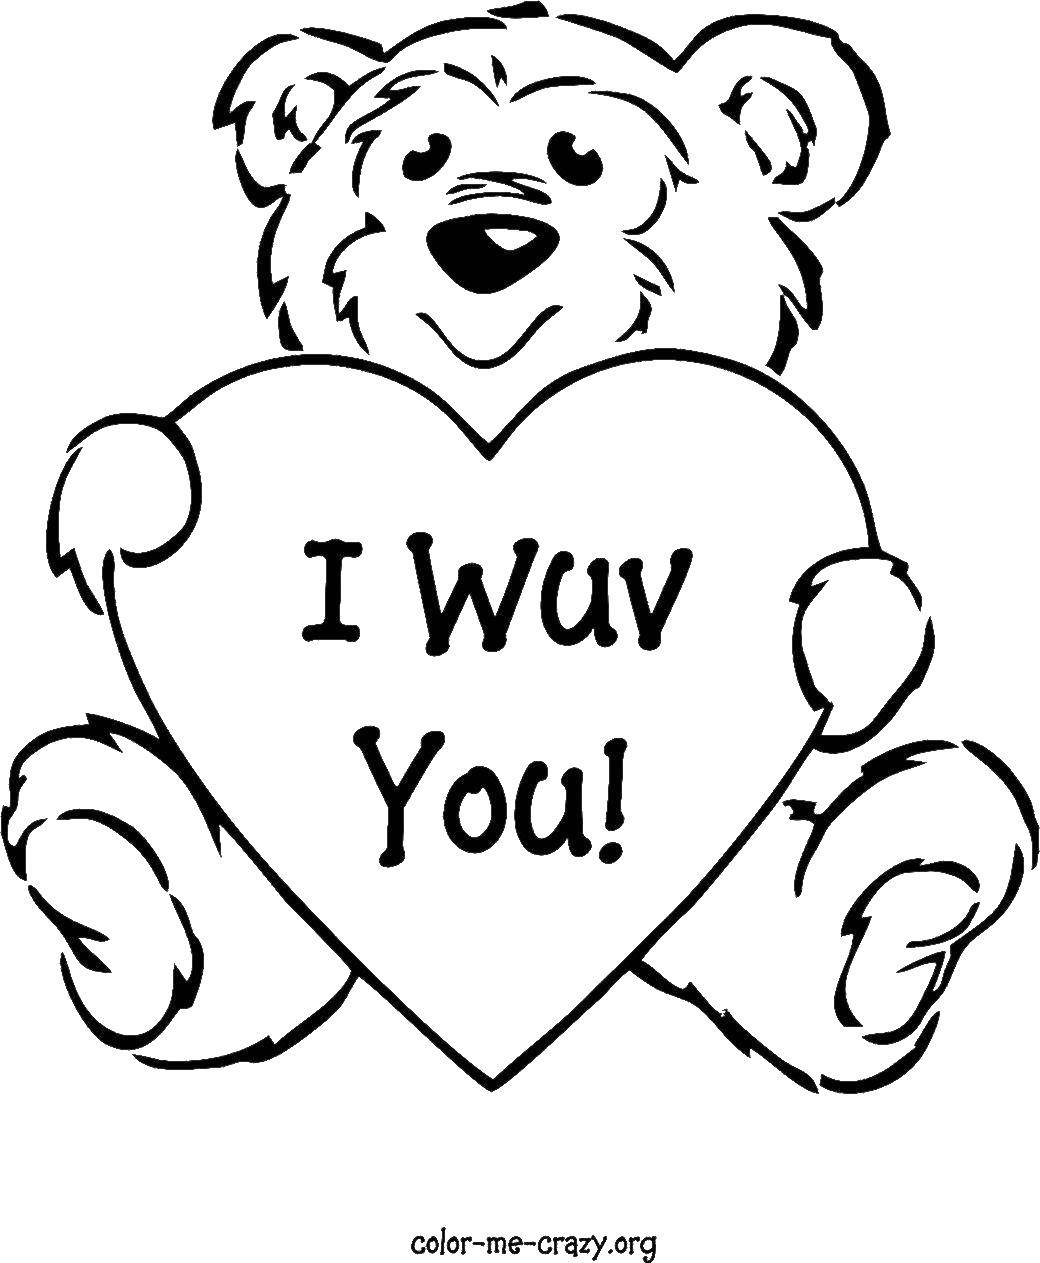 Coloring Bear and heart. Category I love you. Tags:  bear, heart.